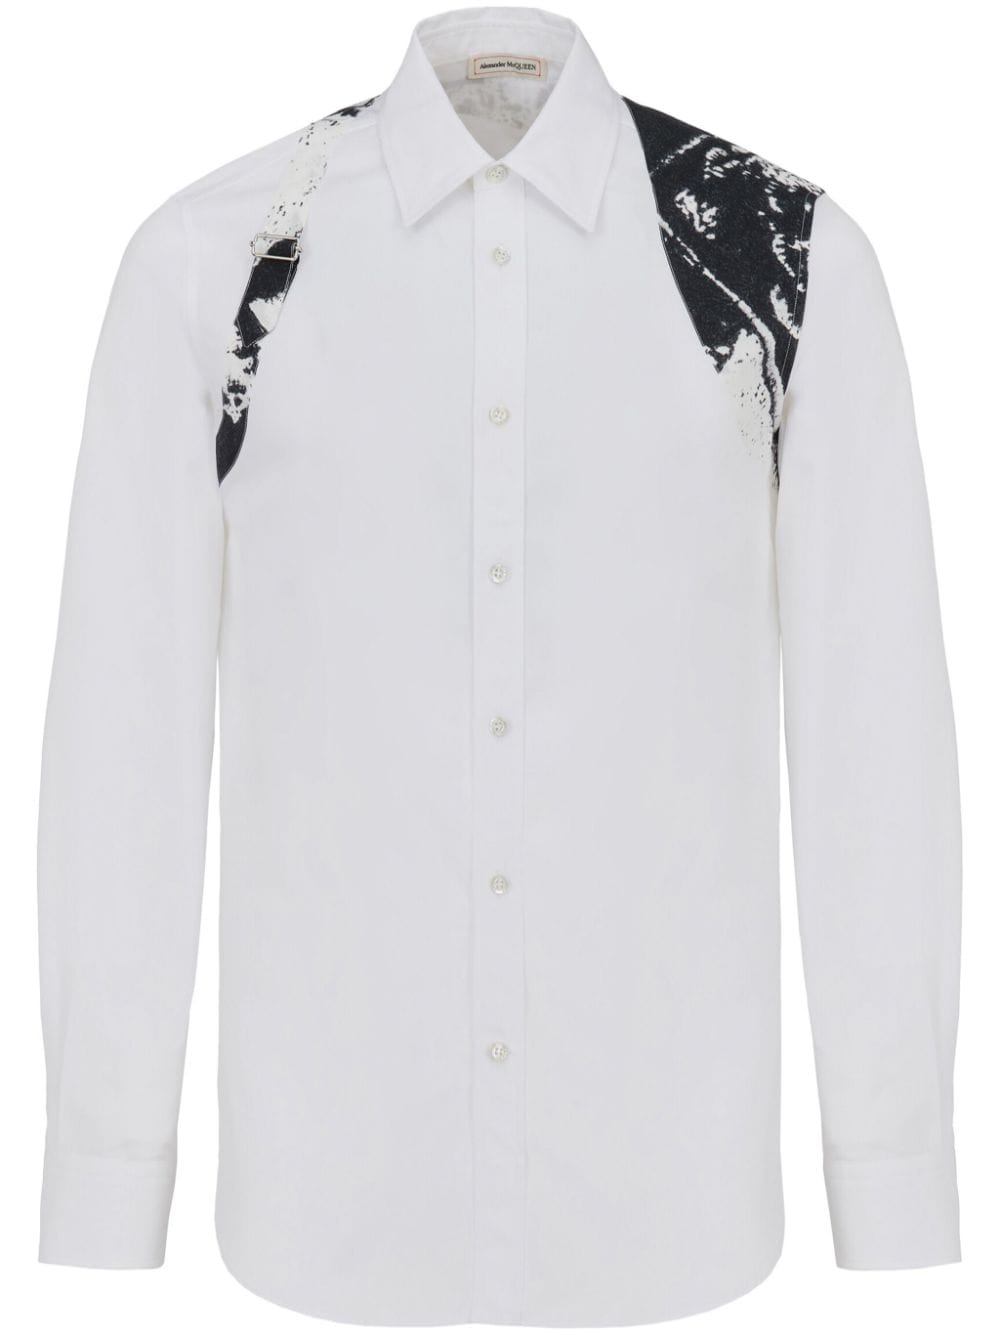 Foldハーネスシャツ - オーガニックコットン ホワイト メンズシャツ